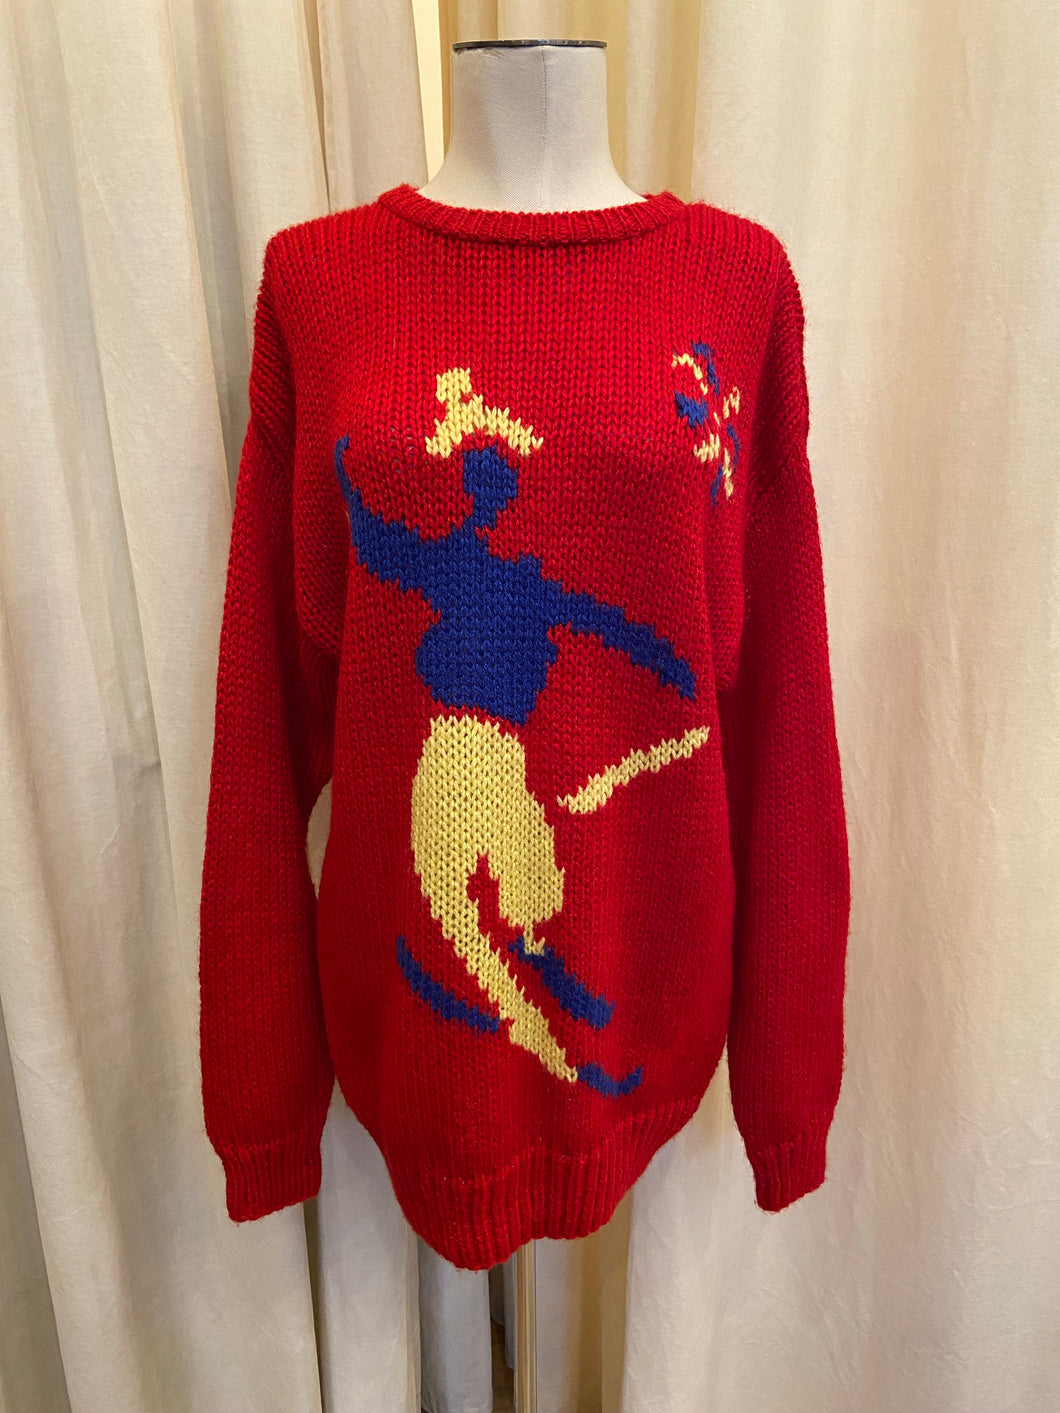 Jane’s closet vintage red knit sweater